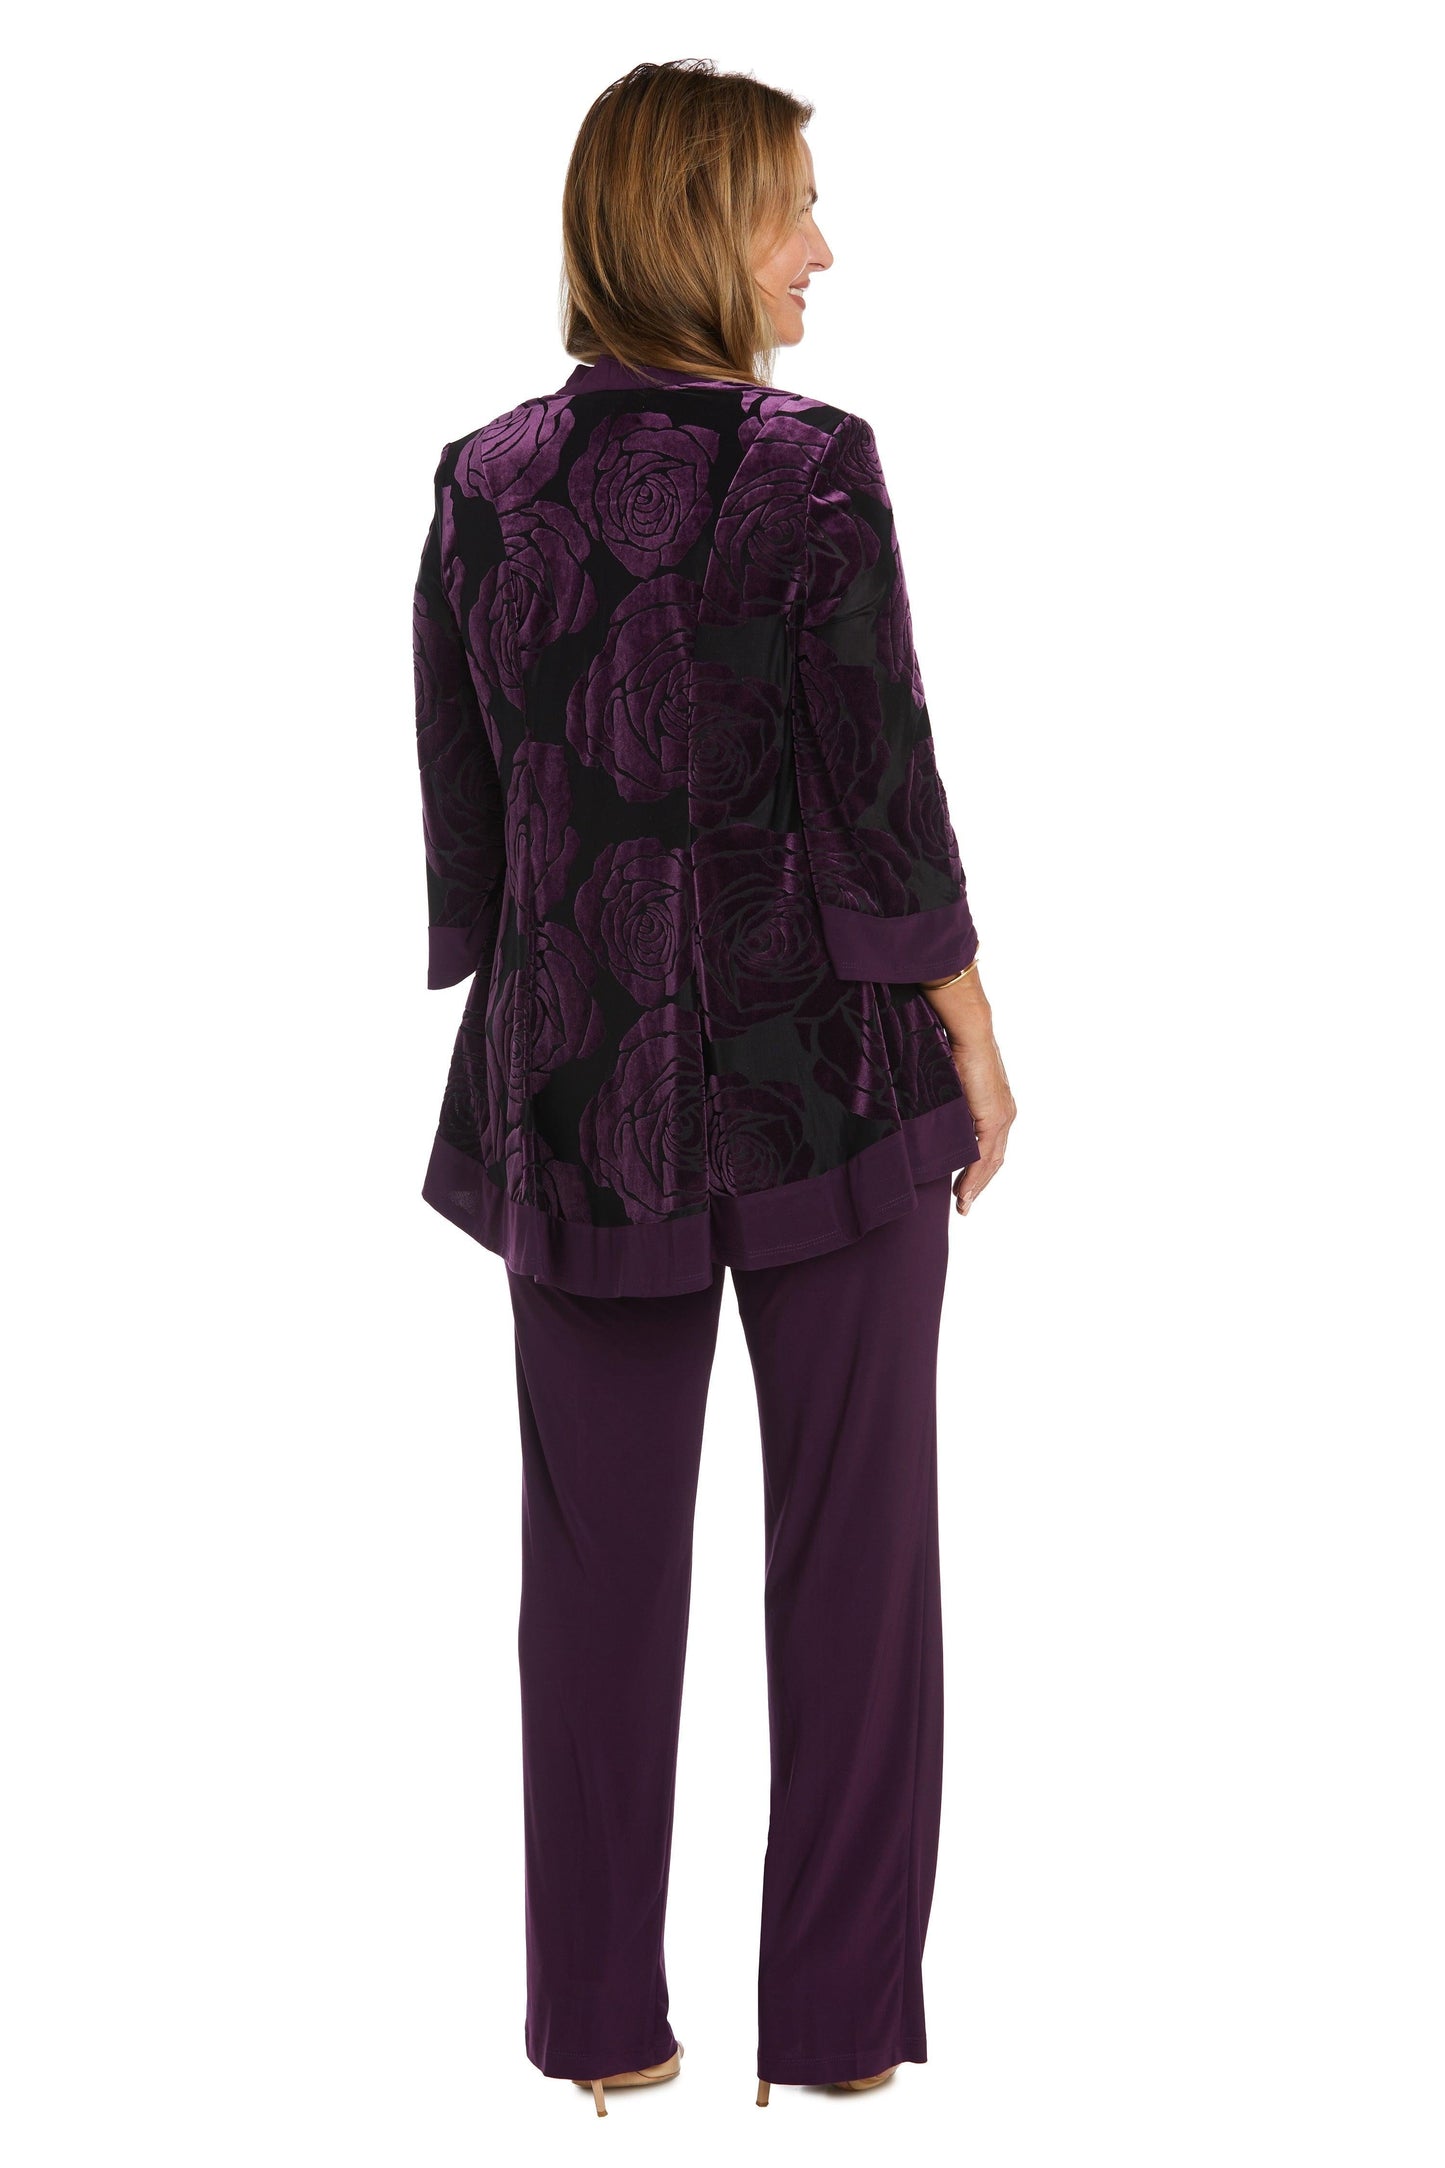 R&M Richards Formal Black Pant suit 9017 - The Dress Outlet